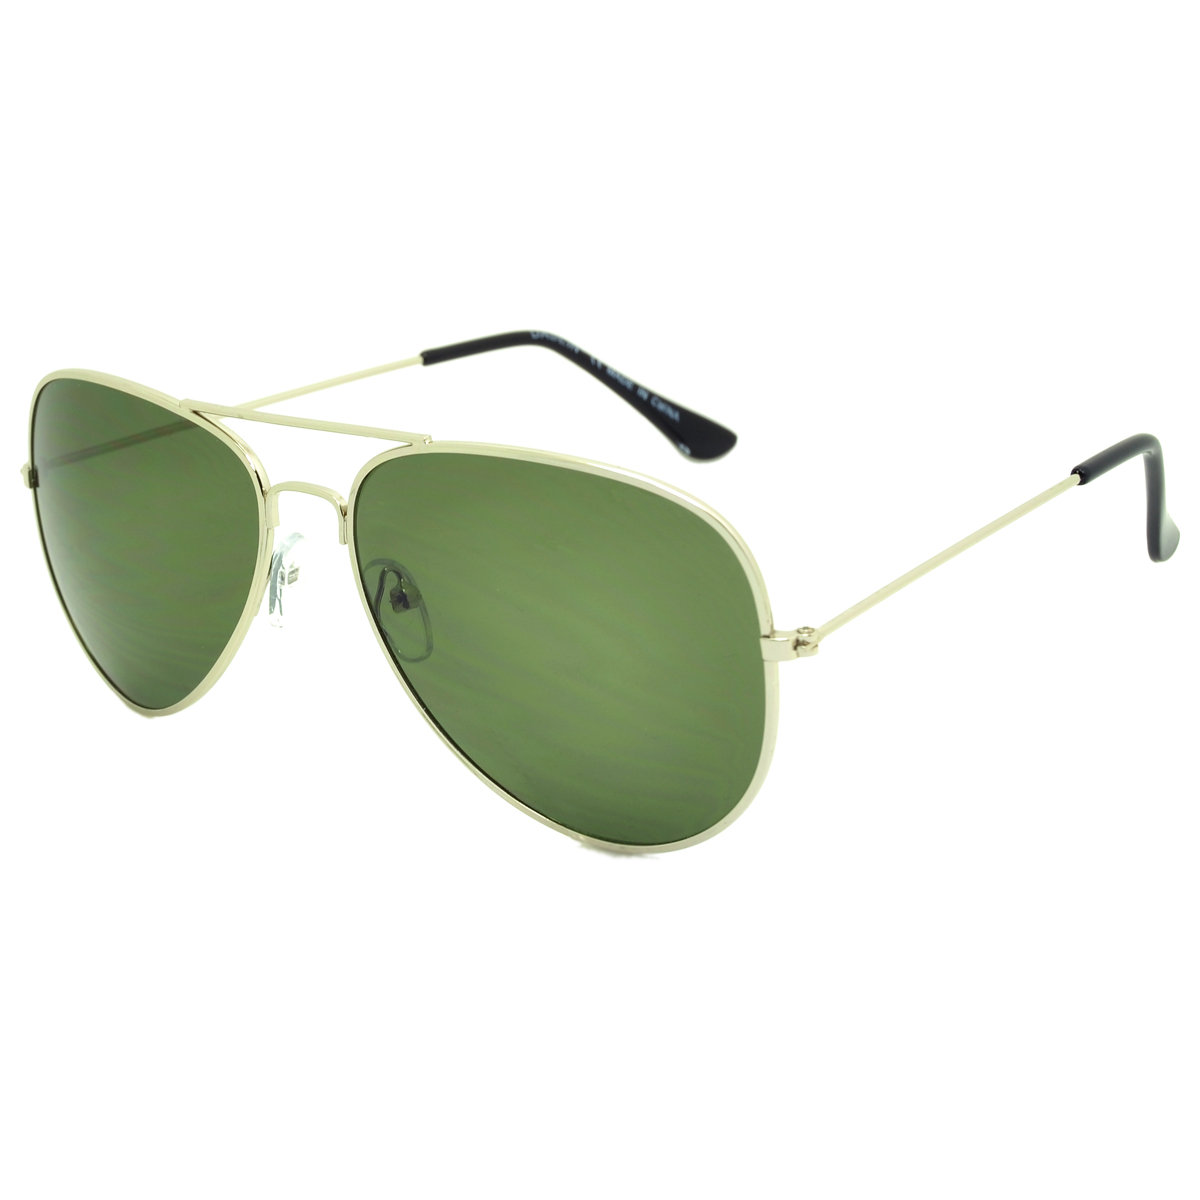 Dasein Metal Aviator Polarized Sunglasses with 100% UV Protection - image 4 of 4